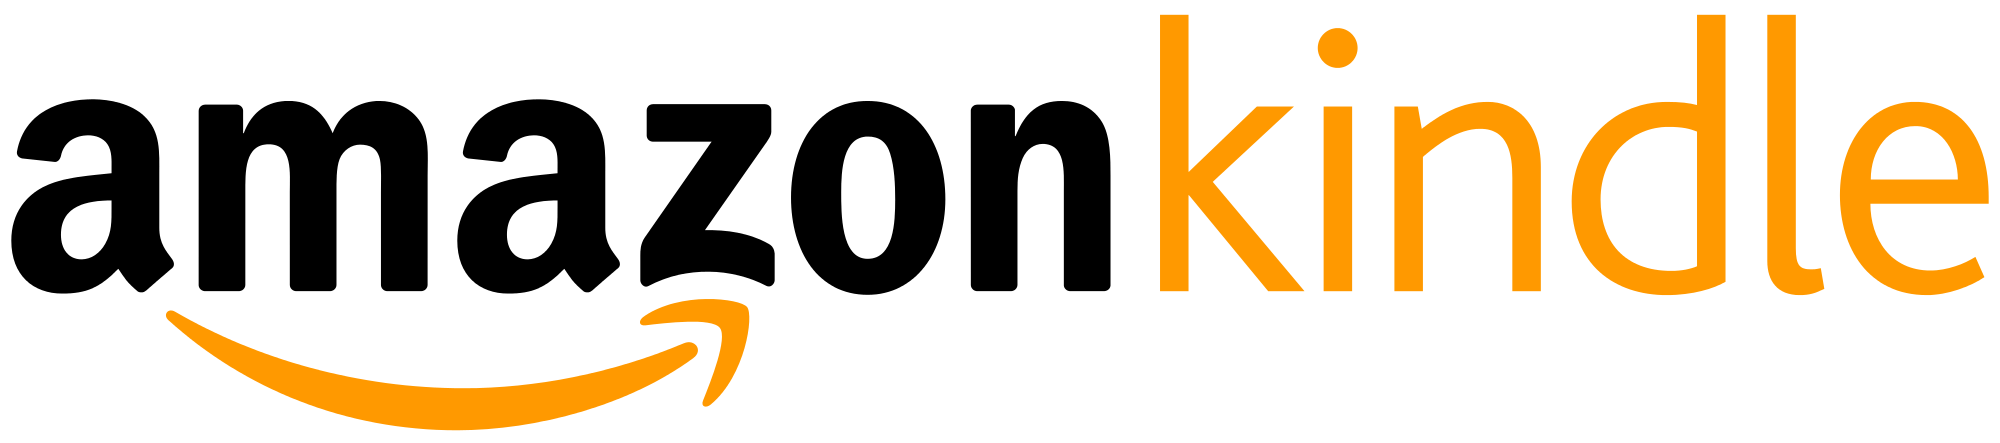 Amazon Kindle Logo - File:Amazon Kindle logo.svg - Wikimedia Commons